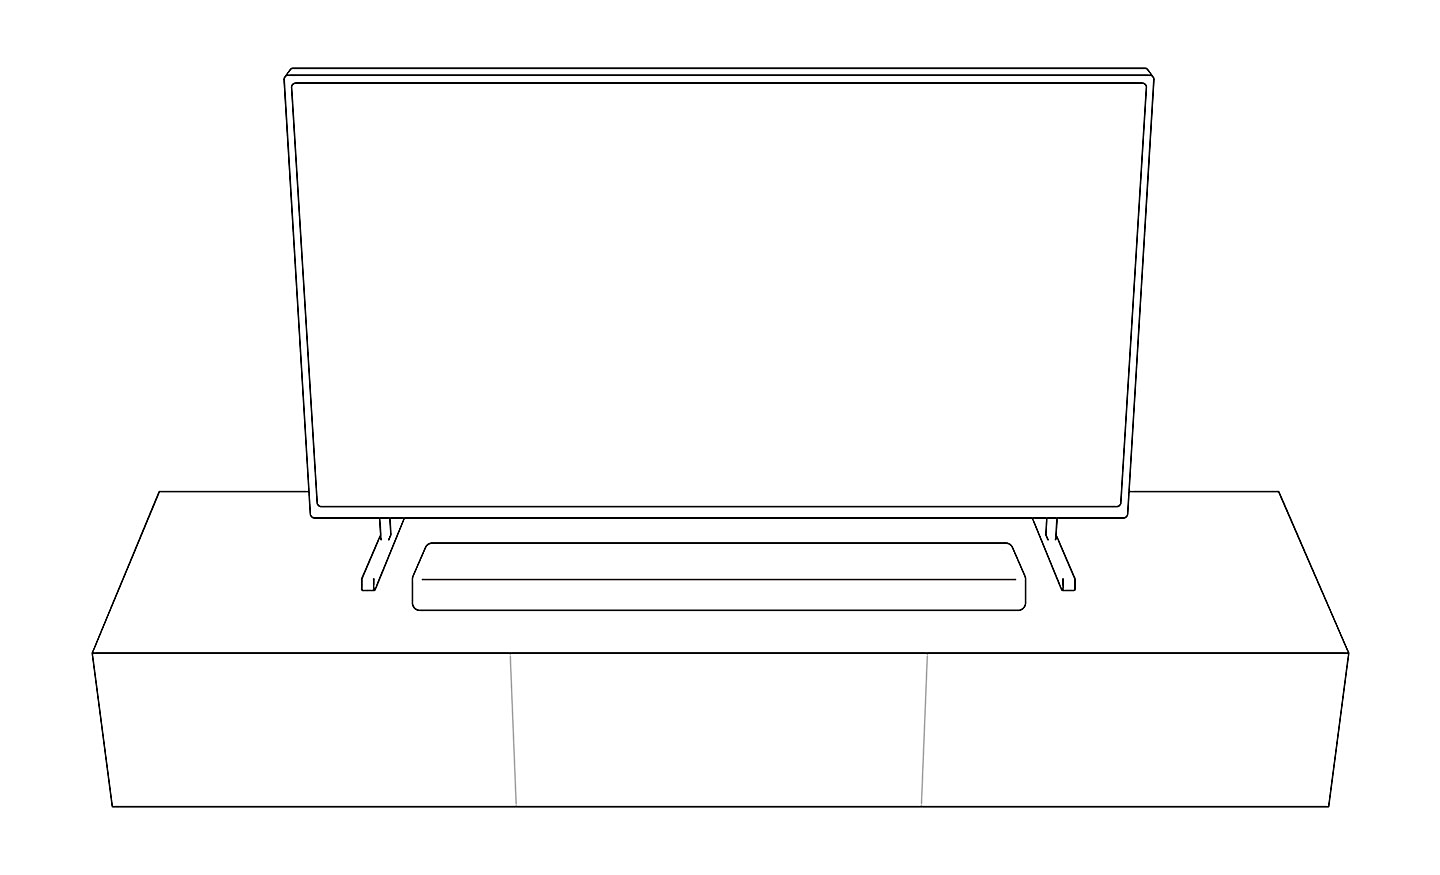 Outline 3d image of a TV and soundbar sitting on a TV unit